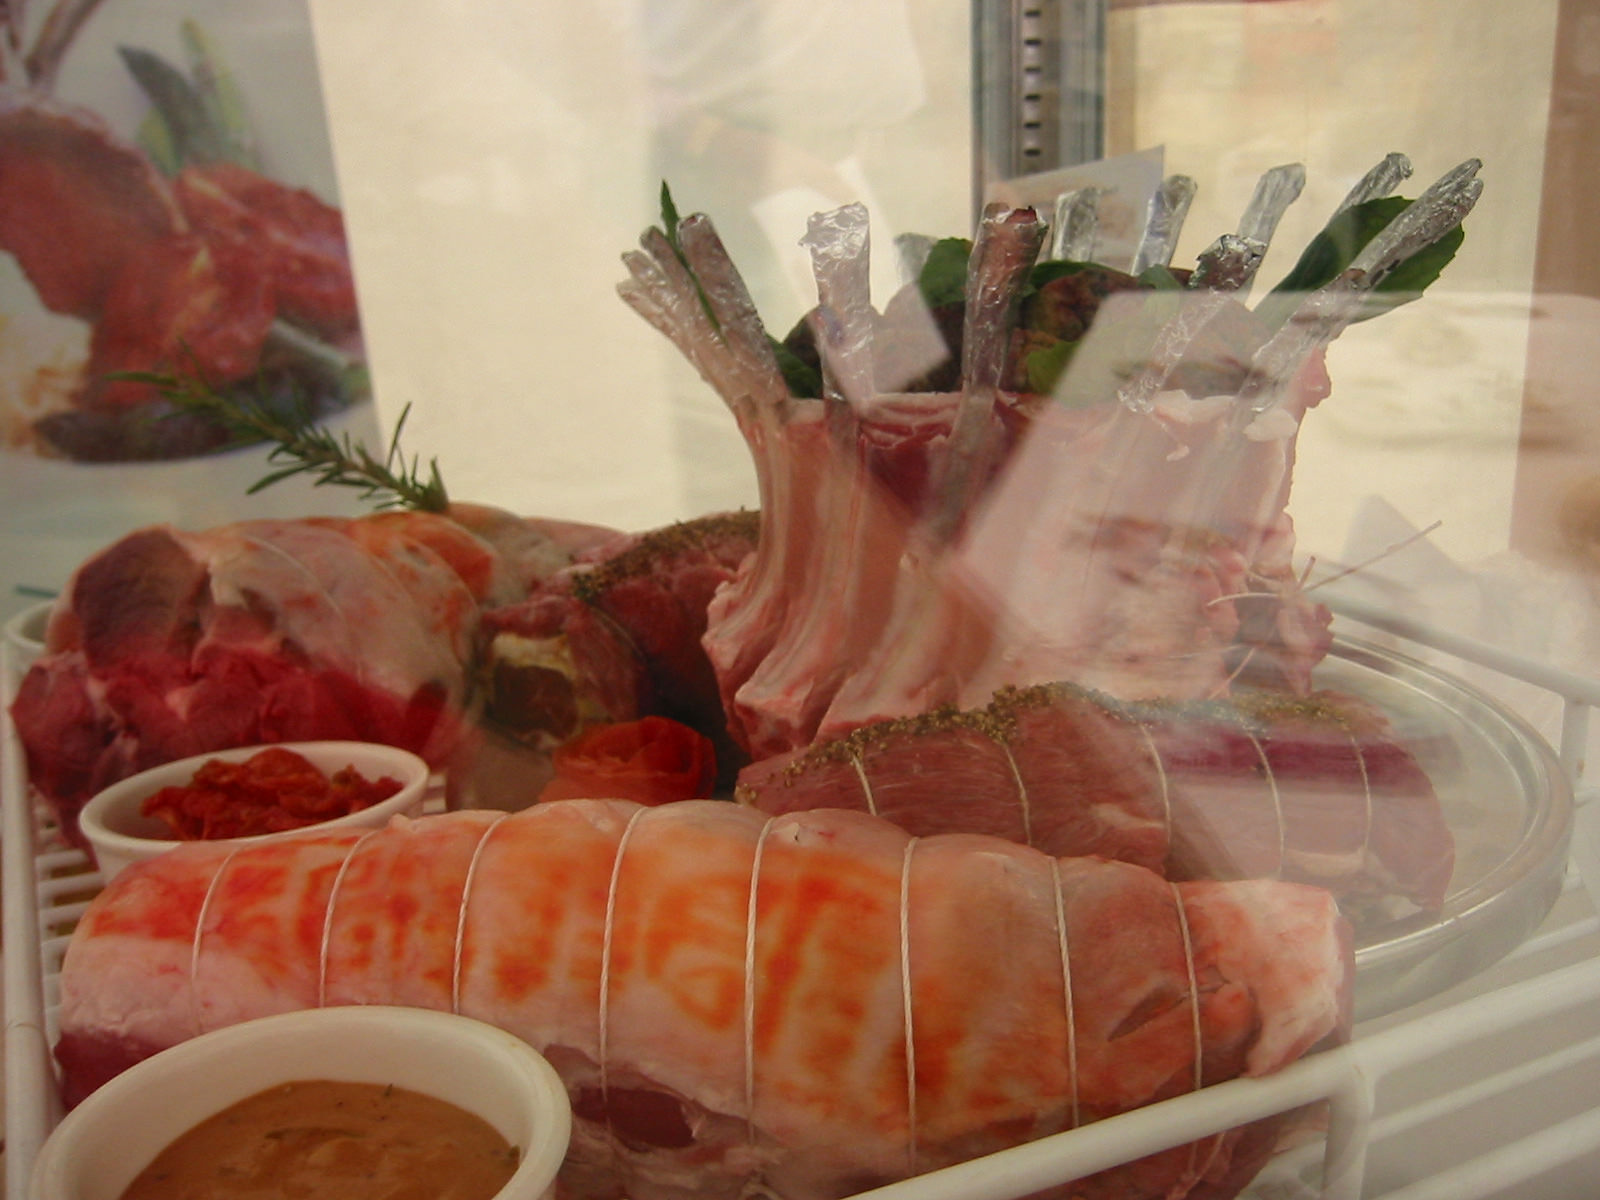 Meats on display